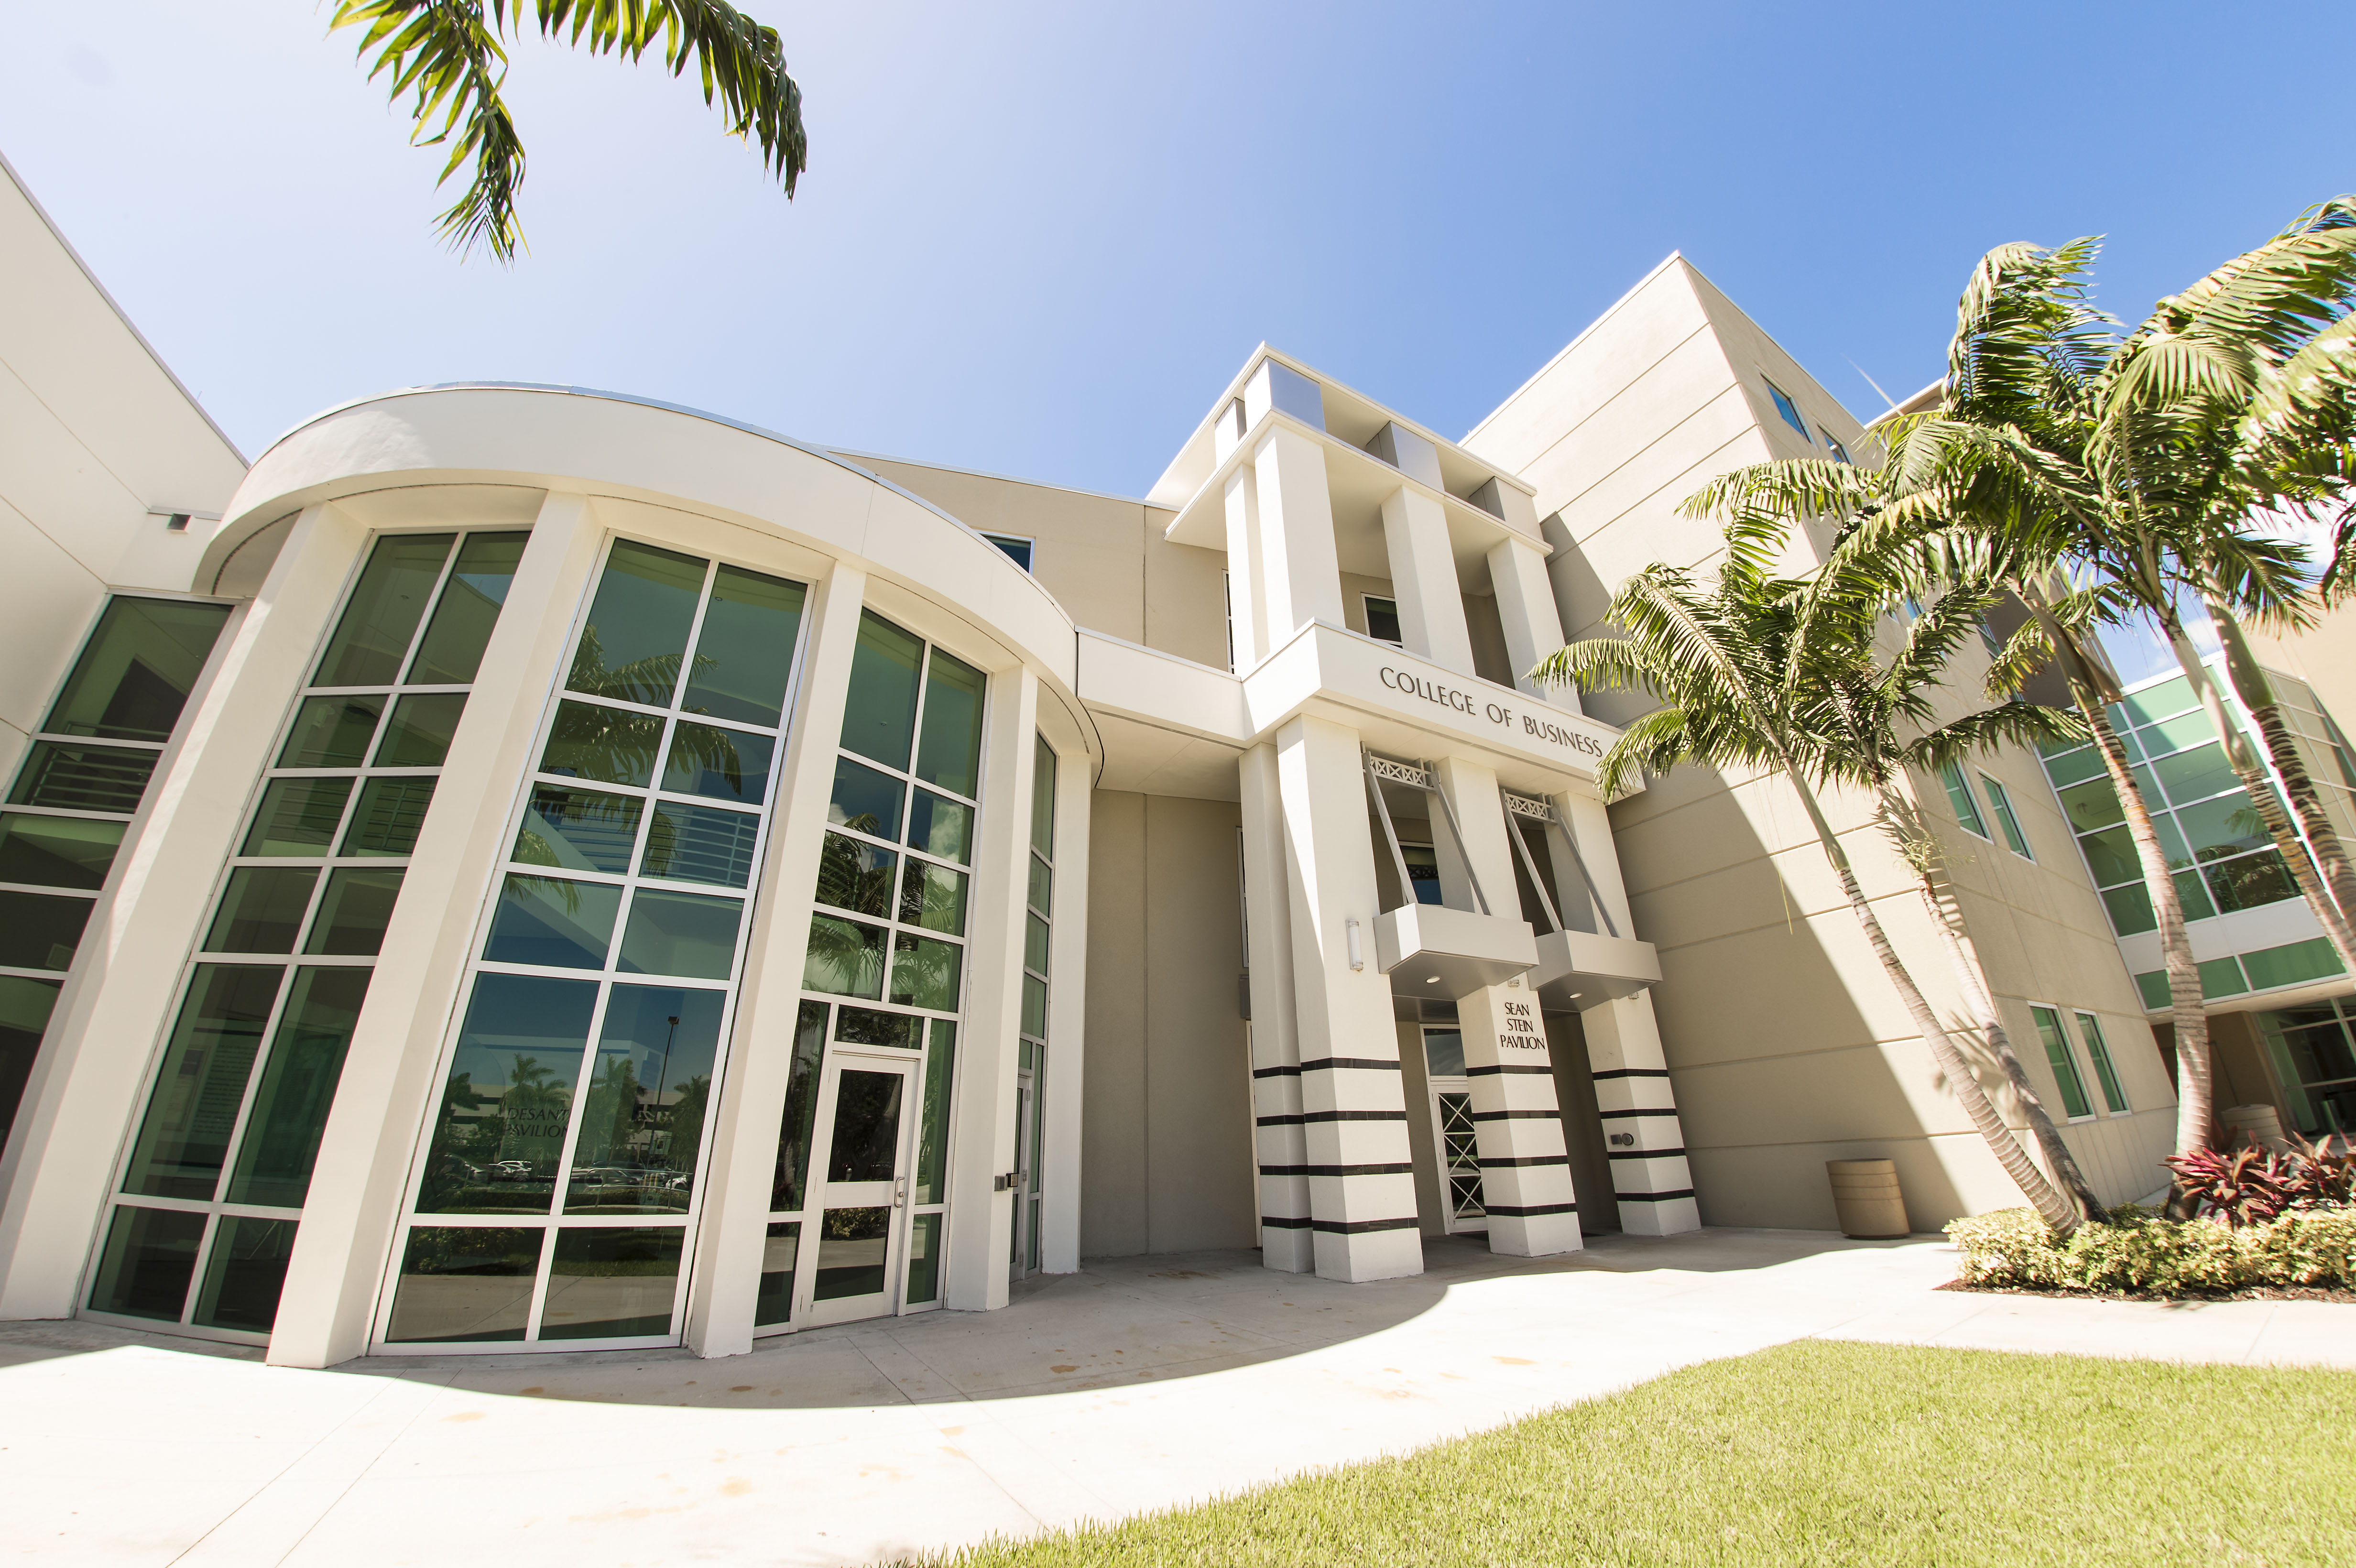 Florida Atlantic University's College of Business